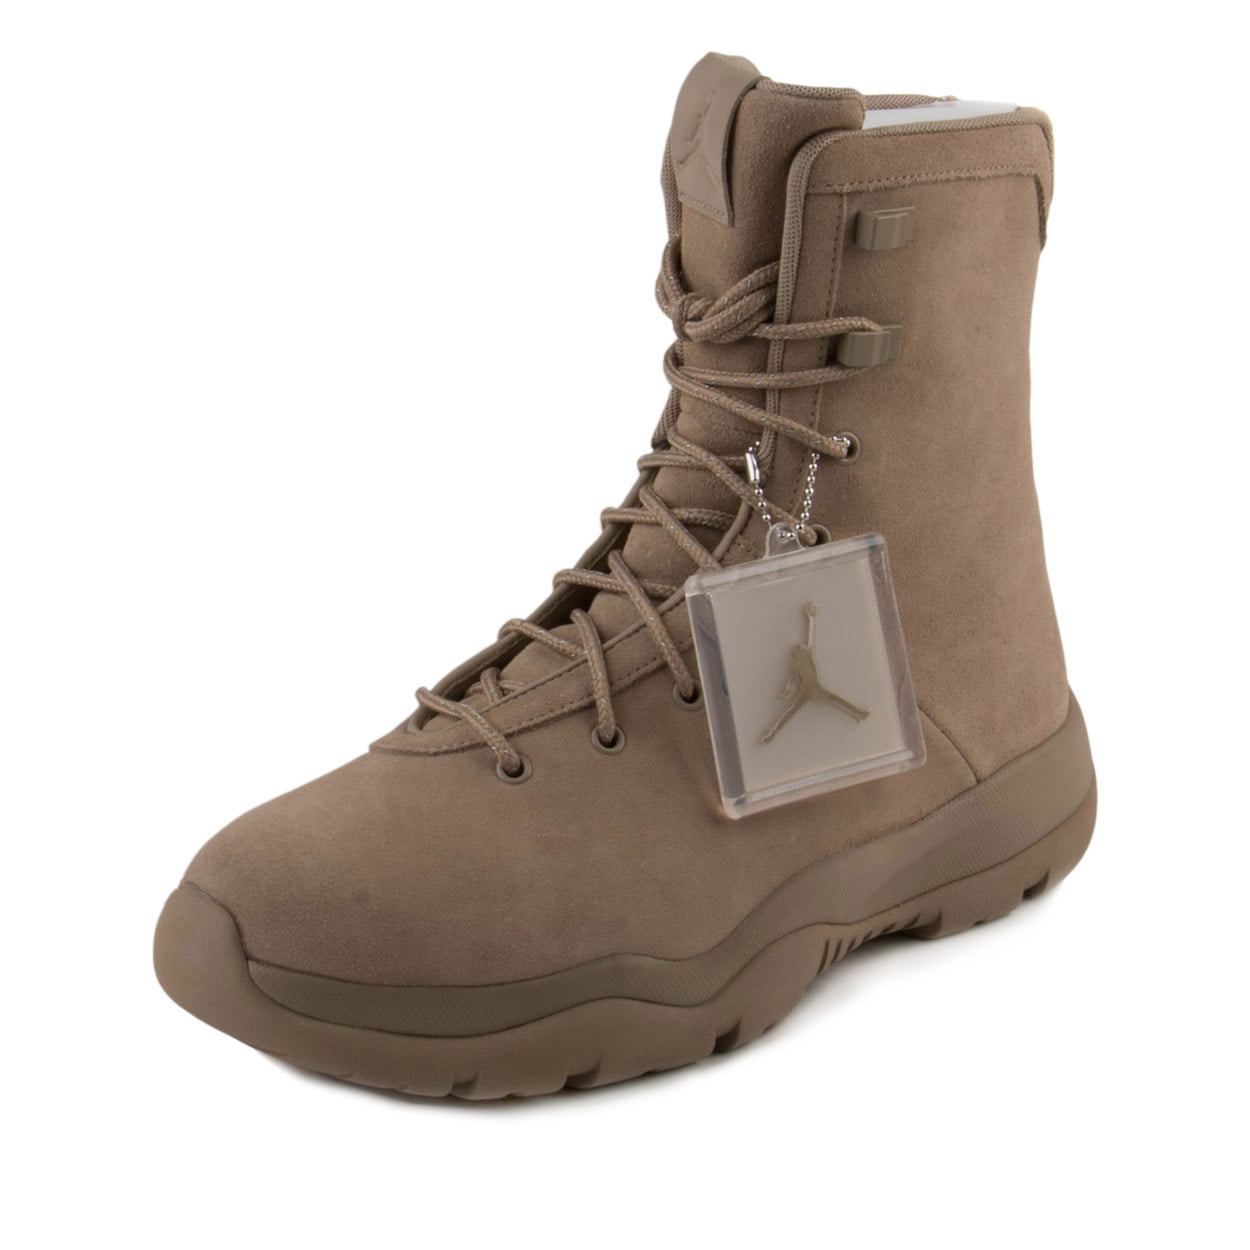 Nike Jordan Boot EP Khaki 878222-205 Walmart.com